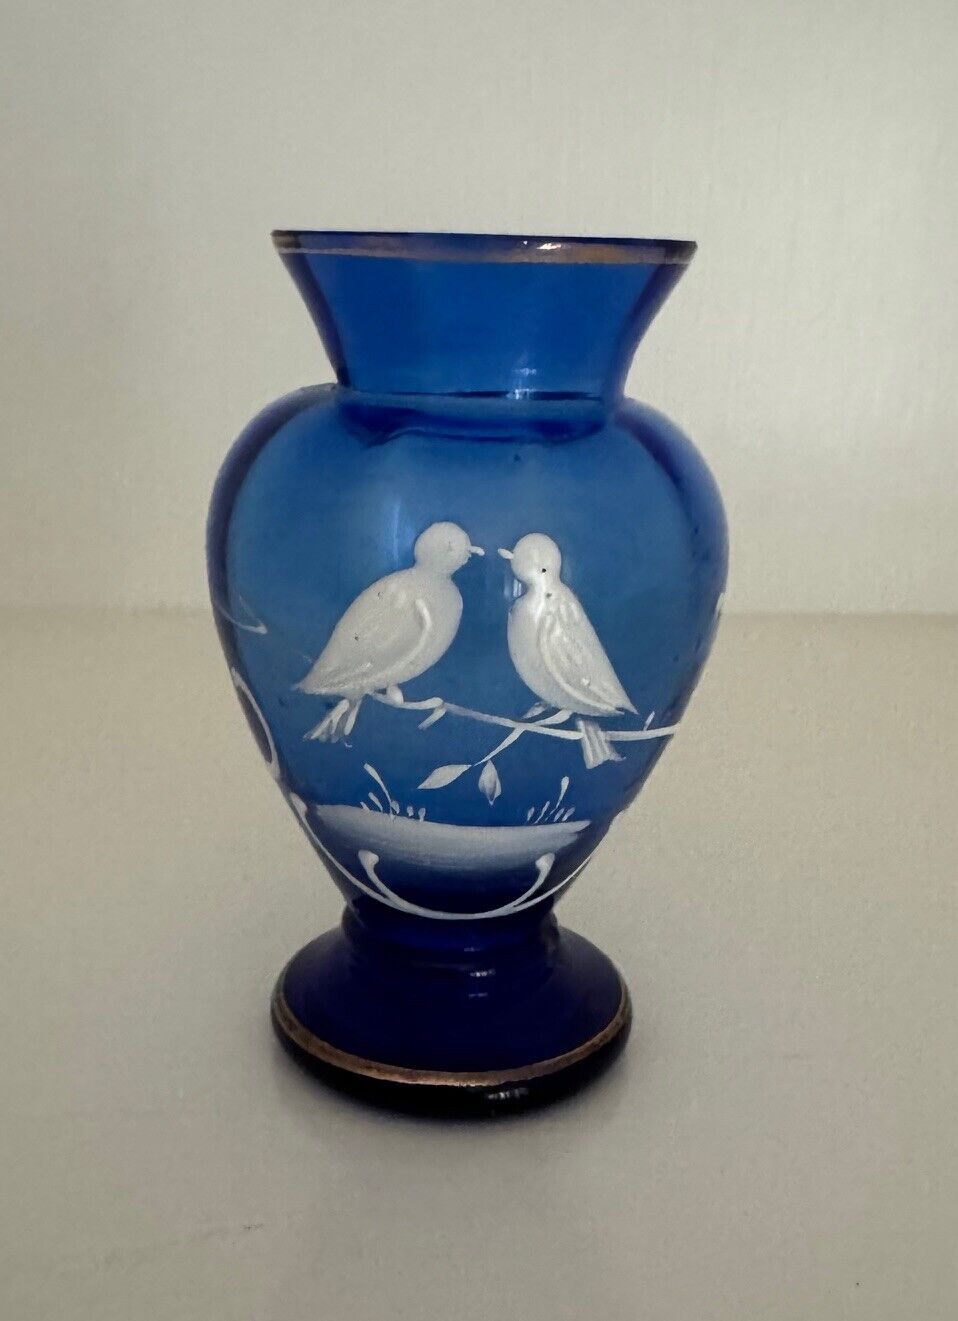  UNIQUE VINTAGE LATE 1940'S SMALL GERMAN BLUE GLASS VASE WITH 2 BIRDS MOTIF